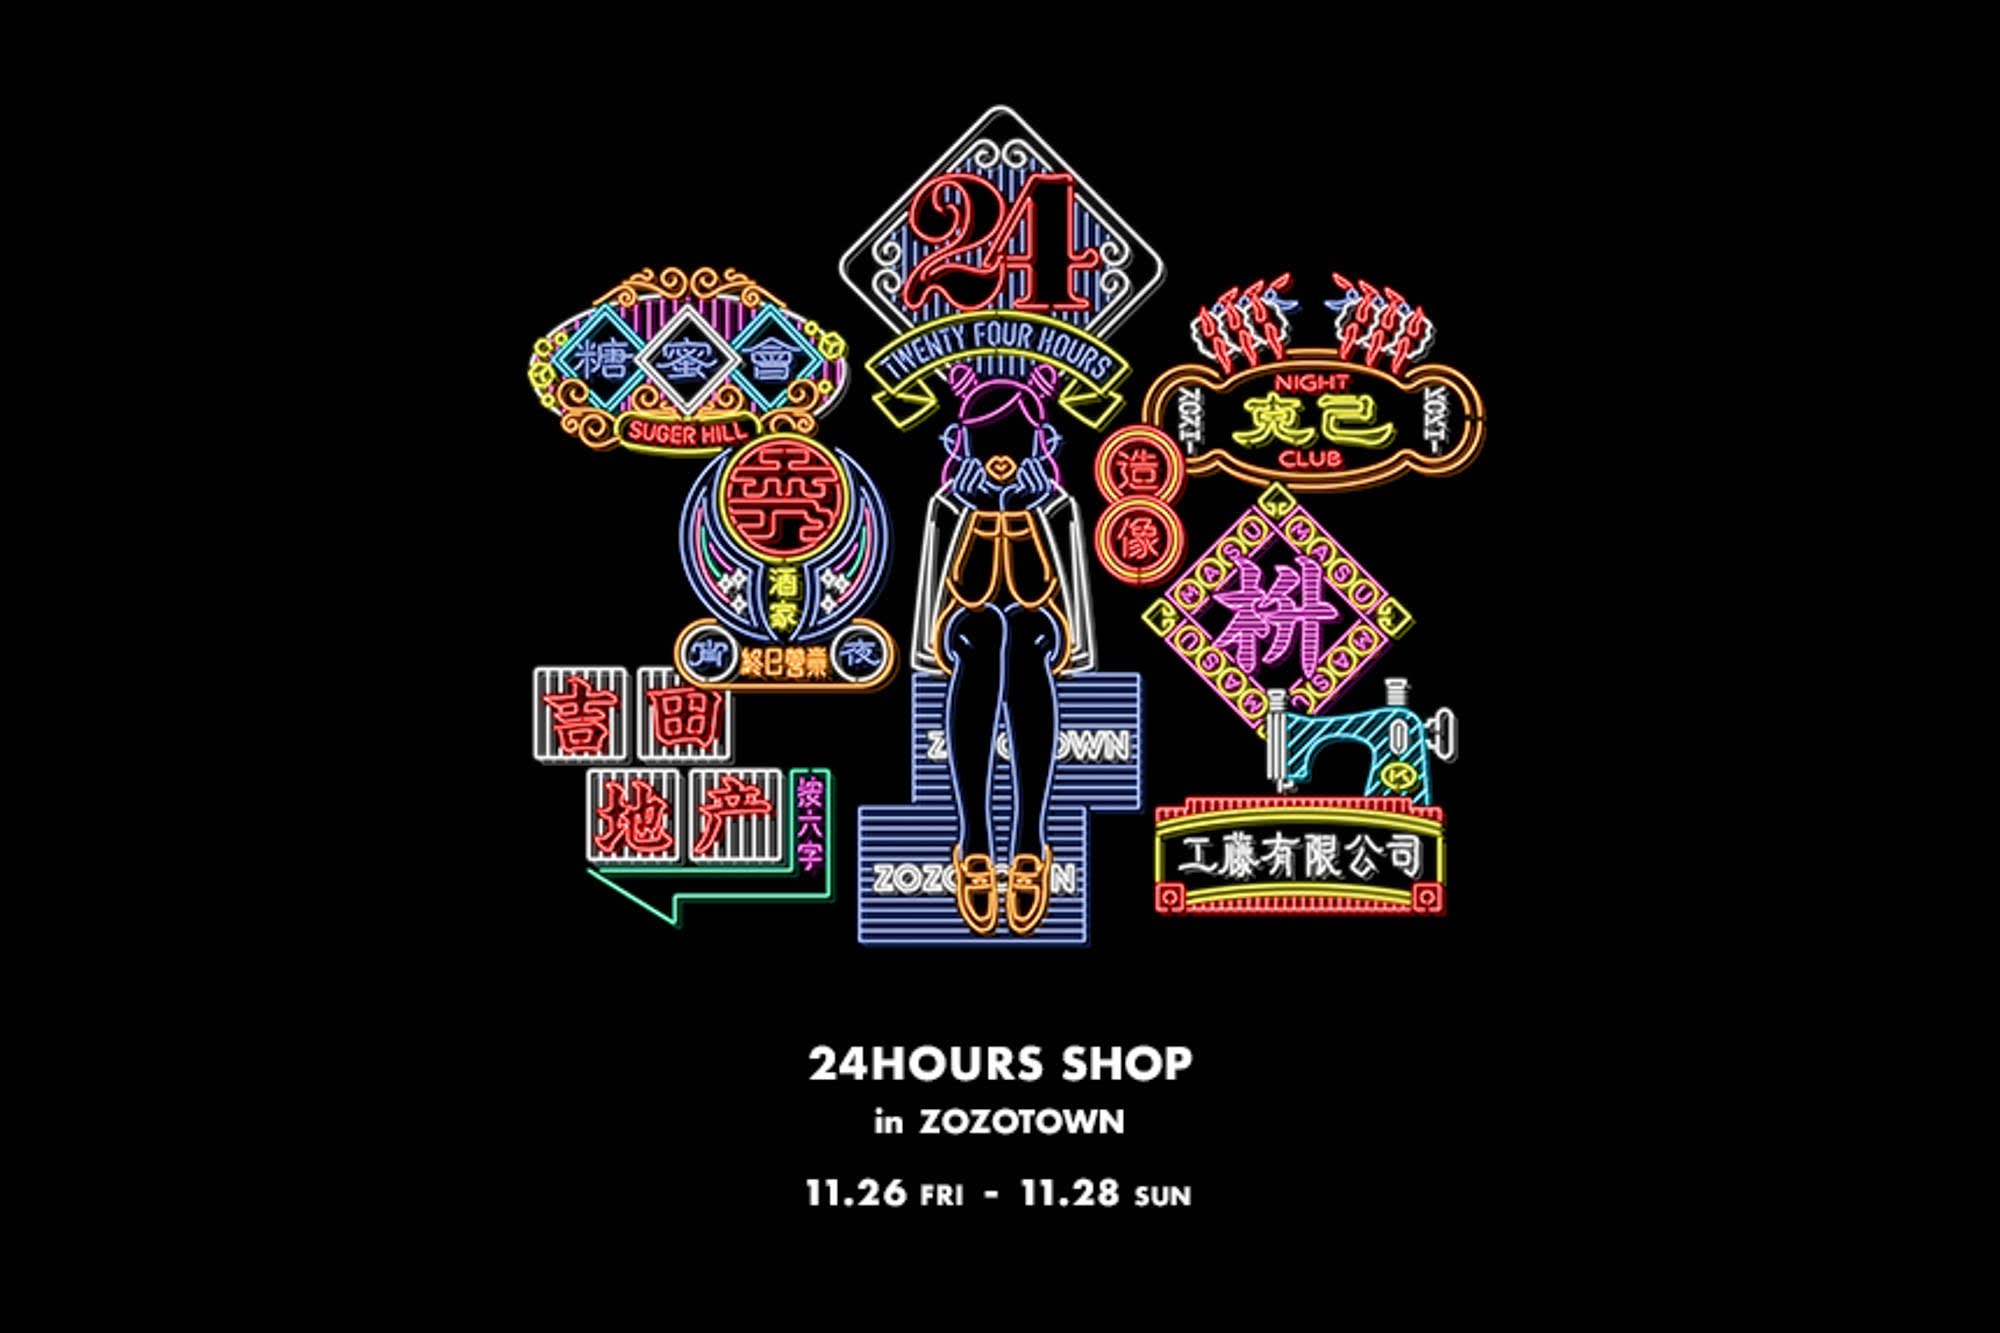 Zozotown 24時間毎にアイテムが入れ替わる 24hours Shop を3日間限定開催 Strend ストレンド